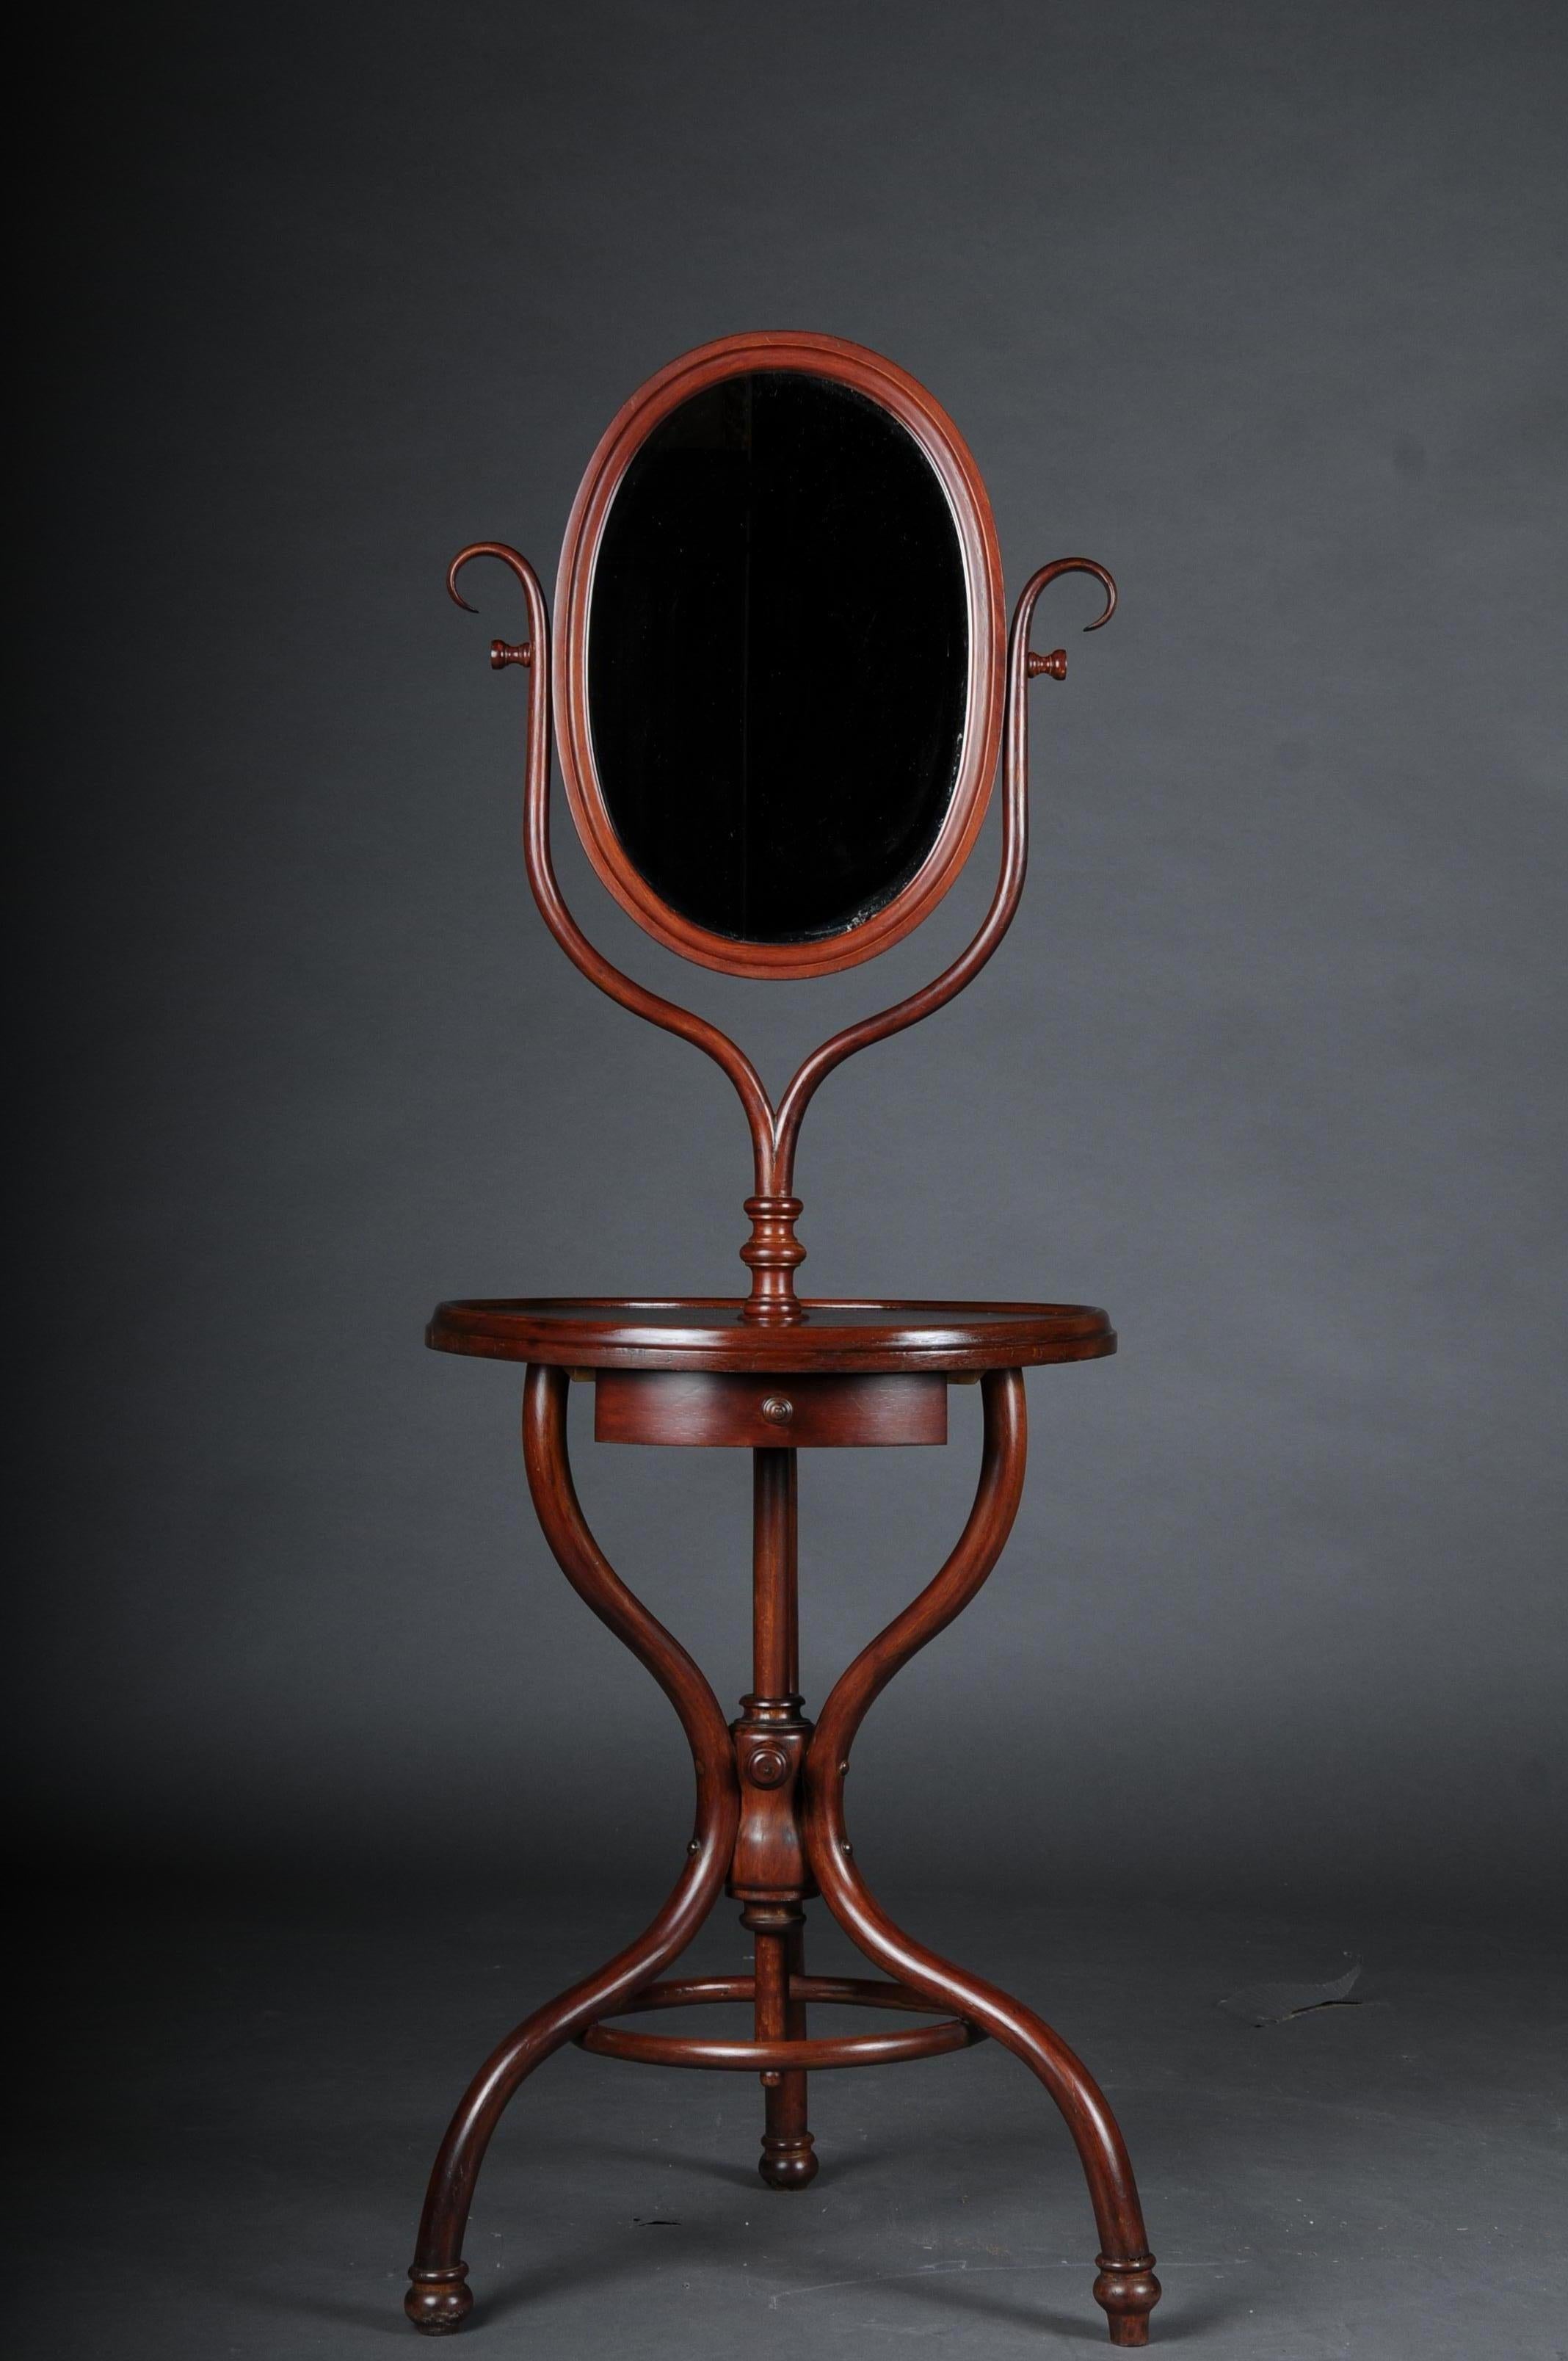 Rare mirror by thonet with inlay
beech wood bent by water vapor
around 1910
Thonet Vienna.